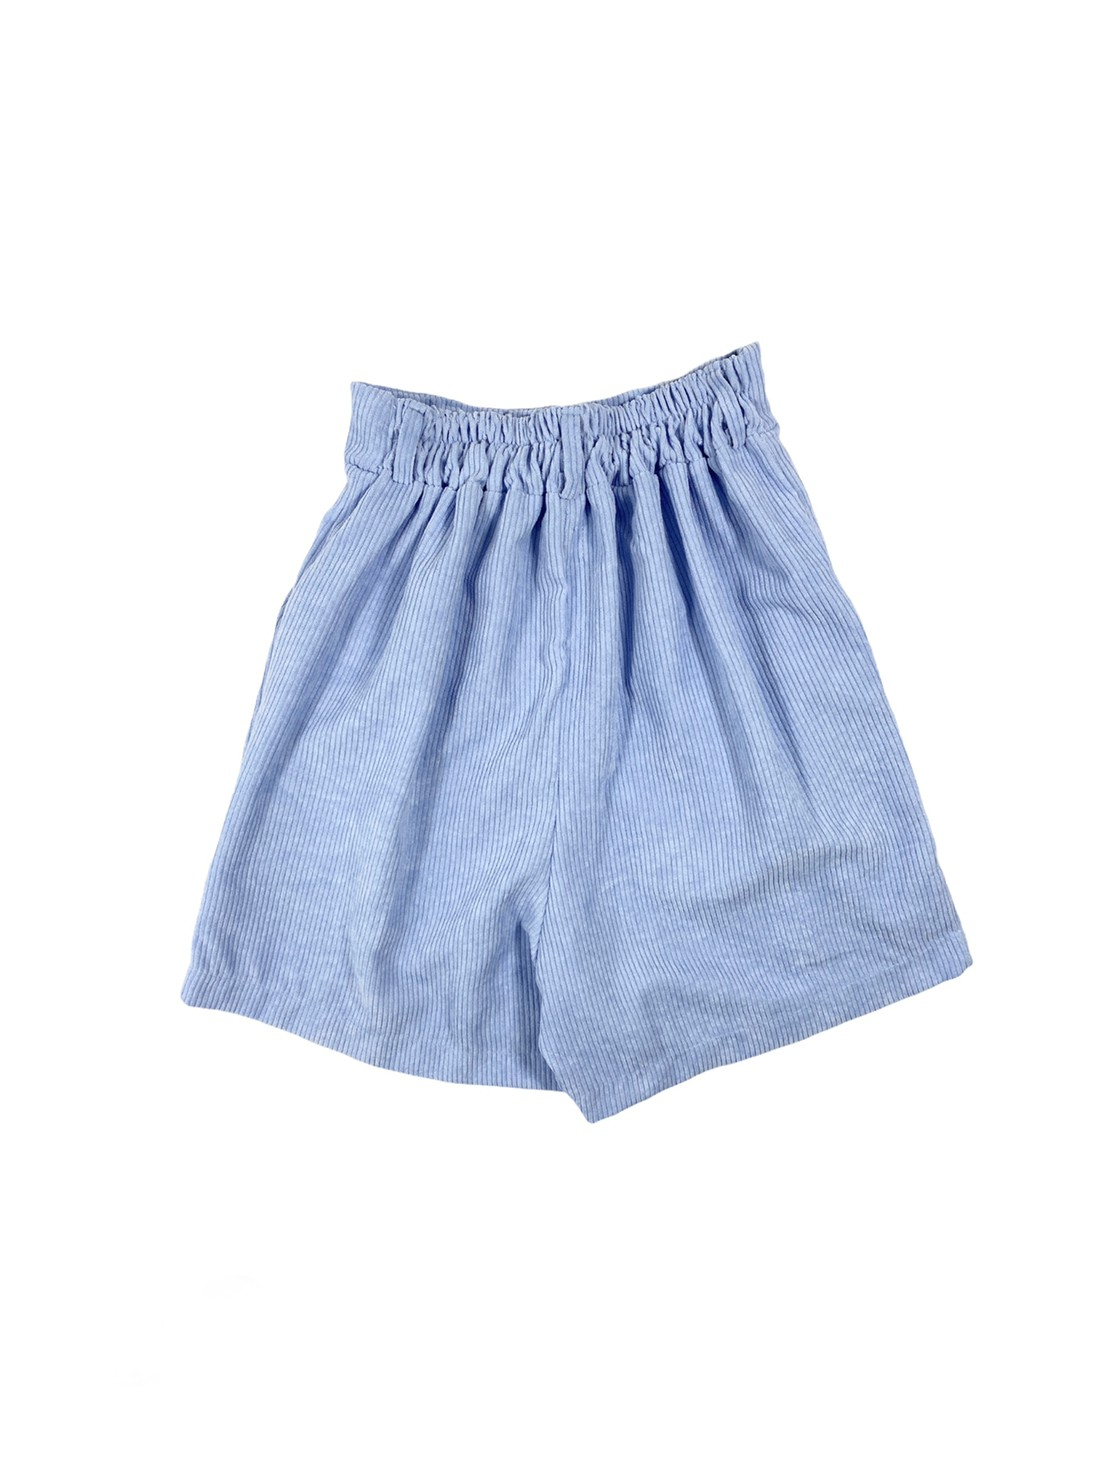 Prey Baby Corduroy Shorts (Light Blue)